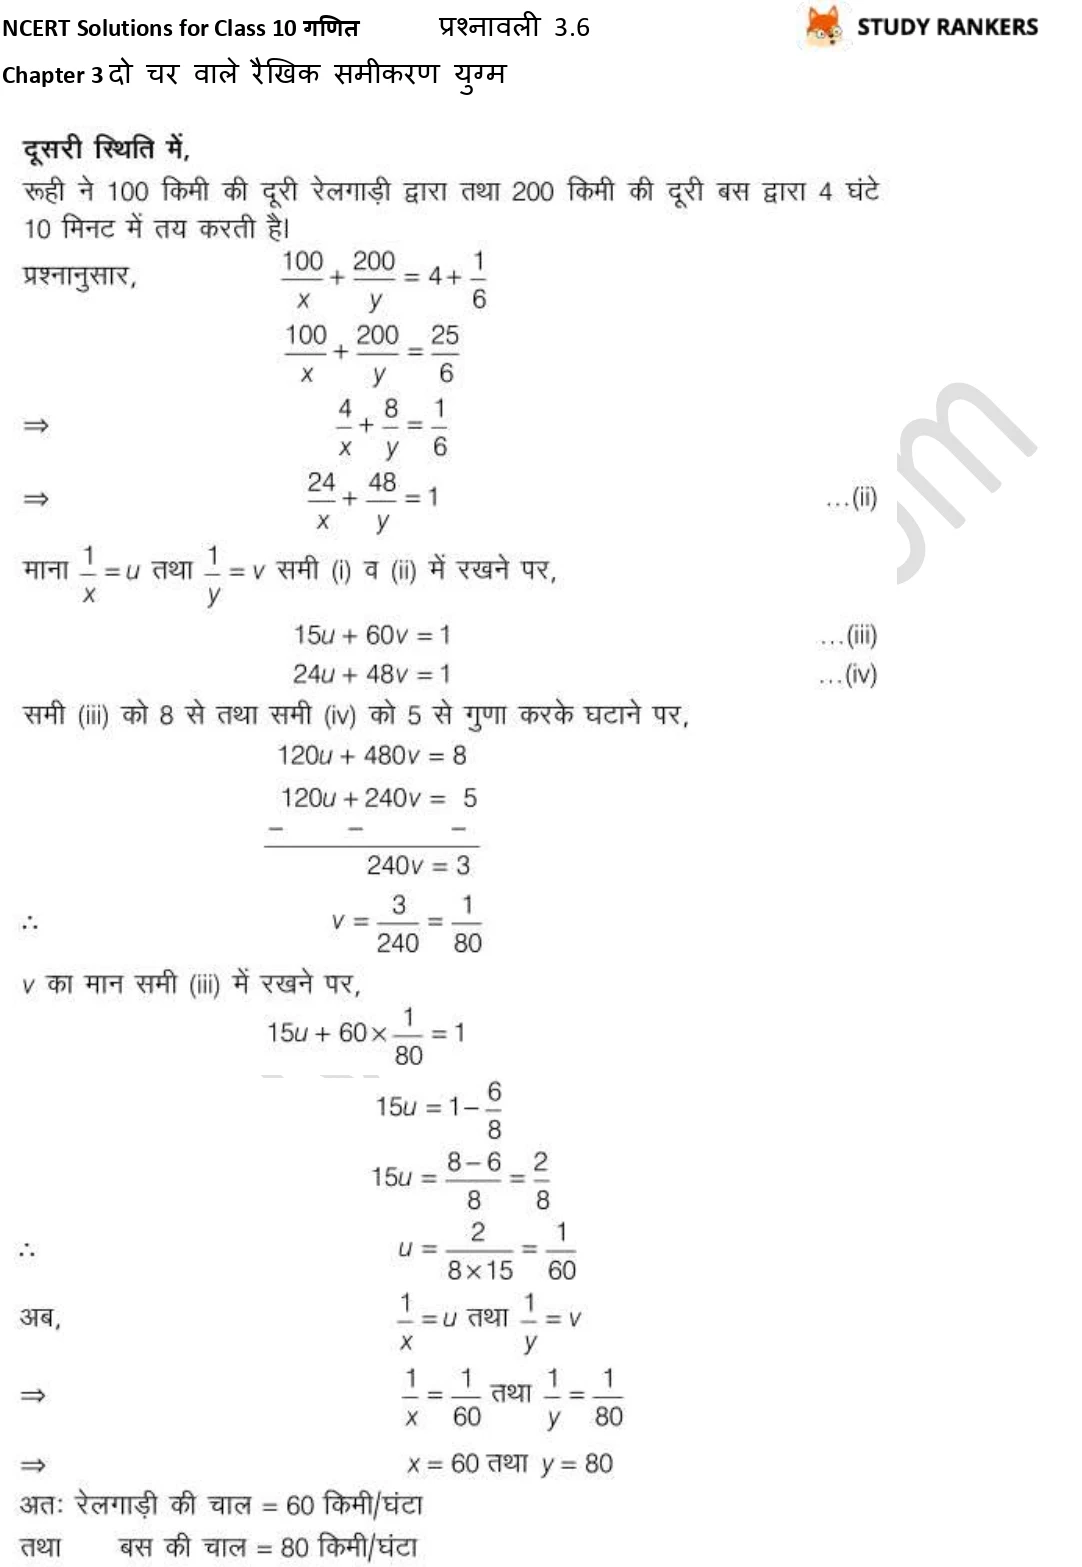 NCERT Solutions for Class 10 Maths Chapter 3 दो चर वाले रैखिक समीकरण युग्म प्रश्नावली 3.6 Part 17